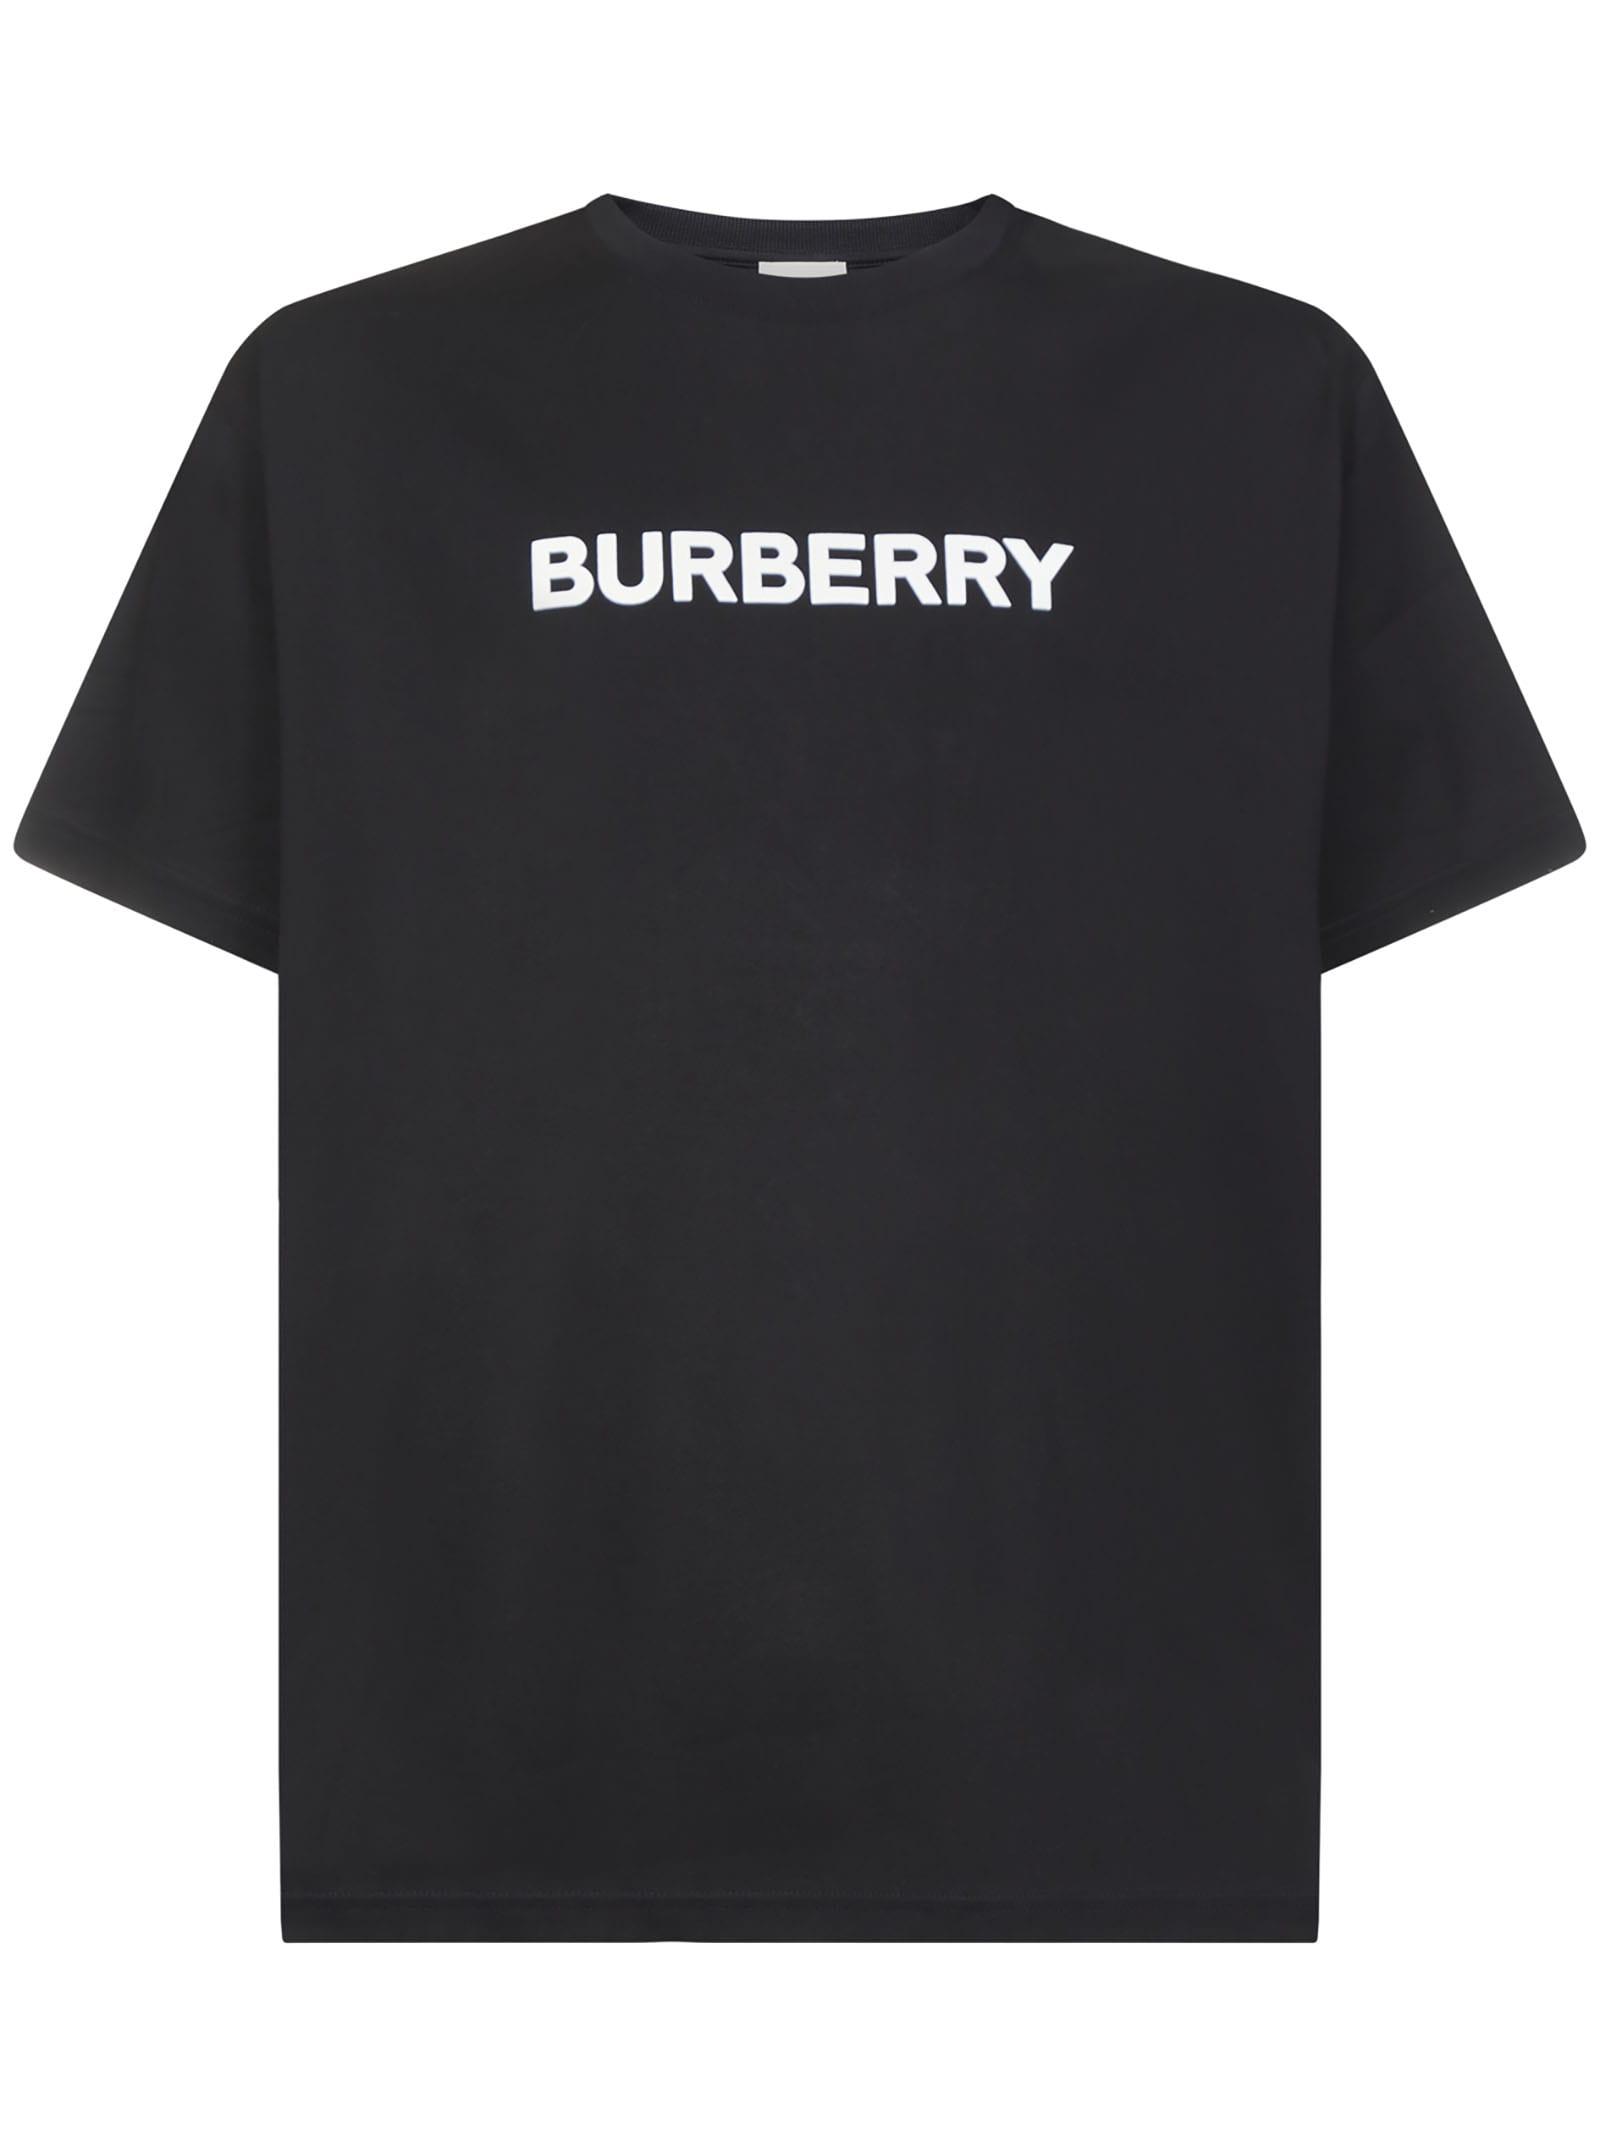 Burberry T-shirt in Black for Men | Lyst